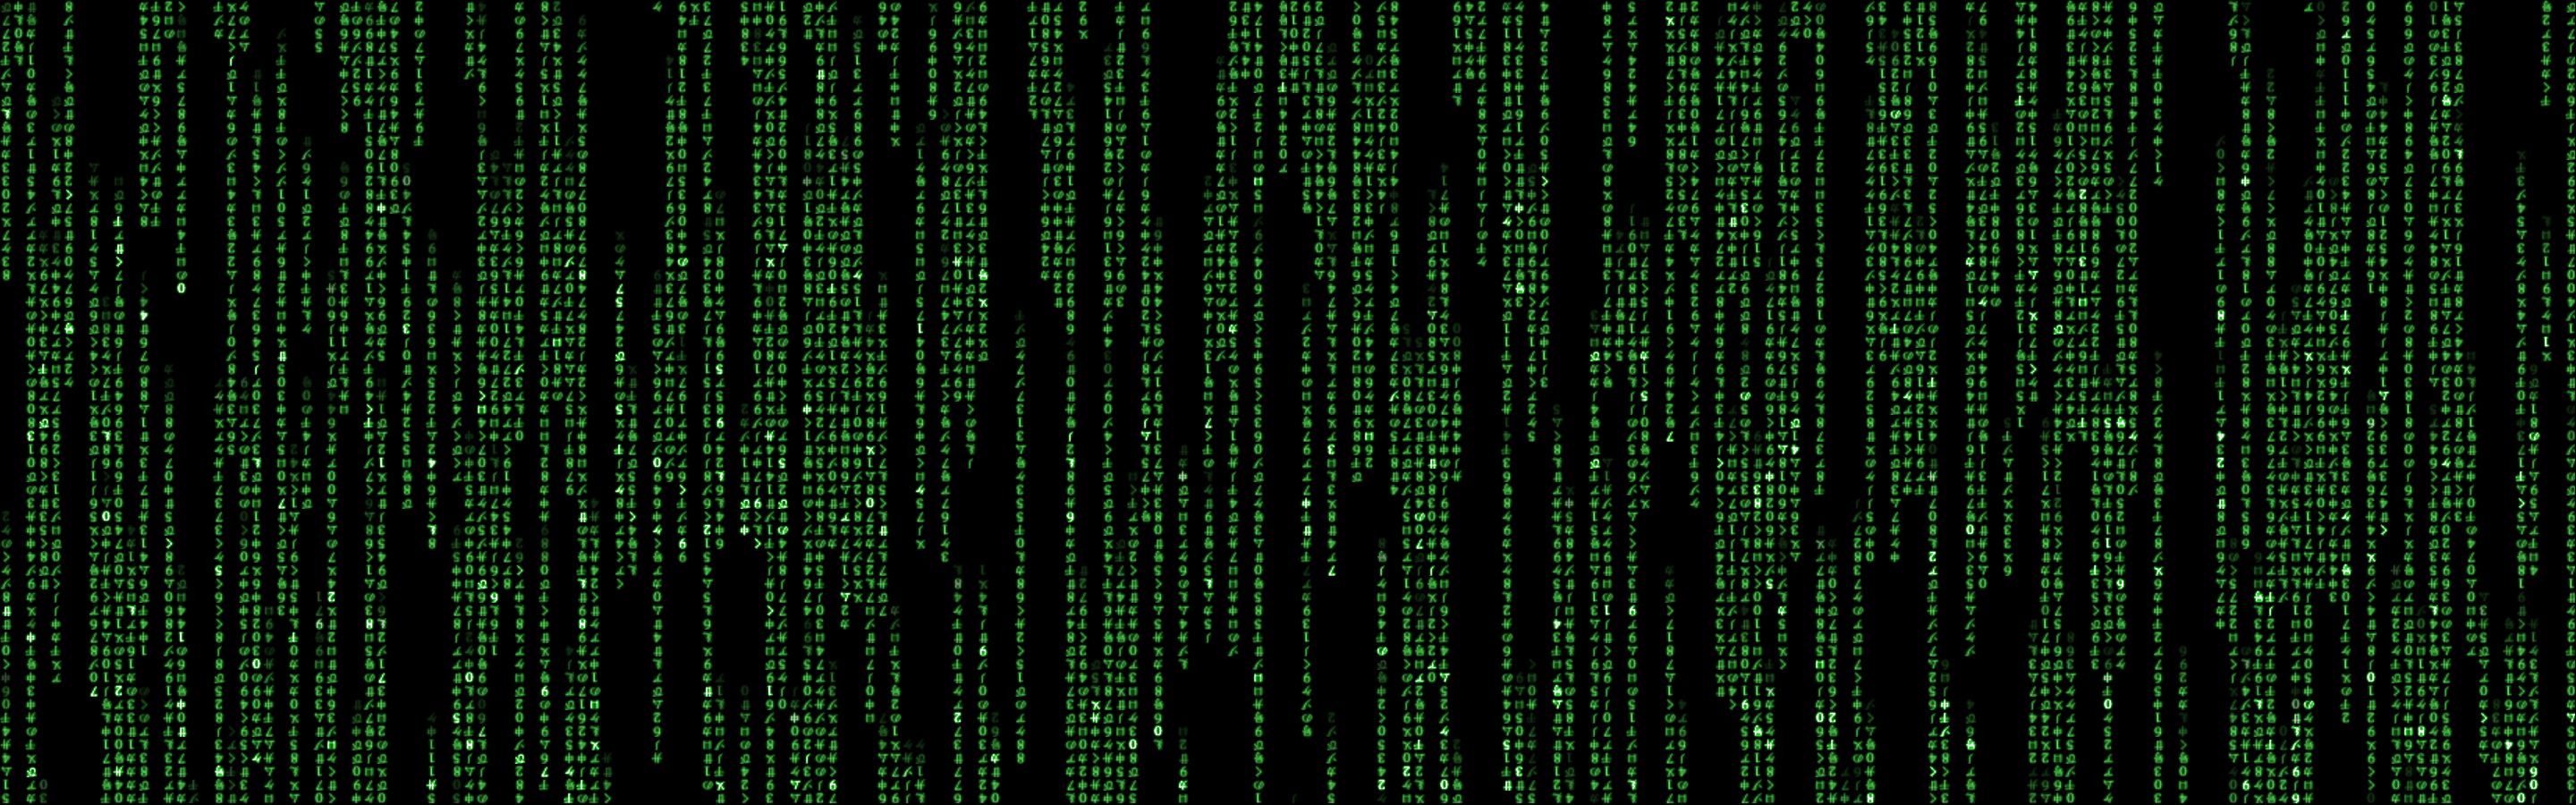 Matrix Code Wallpaper For Your Desktop